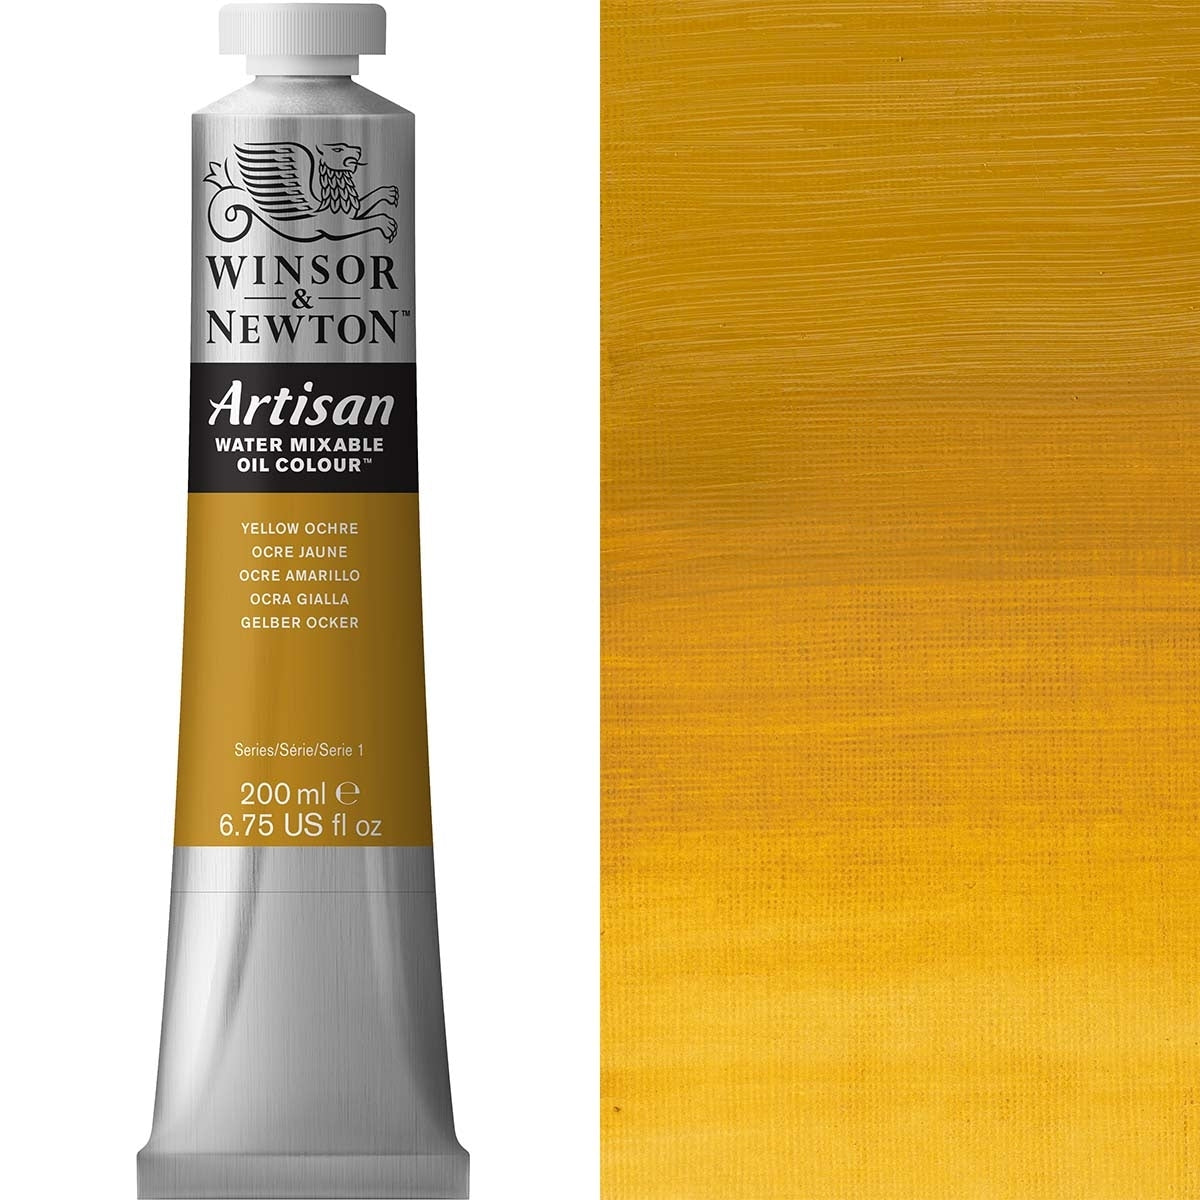 Winsor et Newton - Couleur d'huile artisanale Natermable - 200 ml - Oche jaune